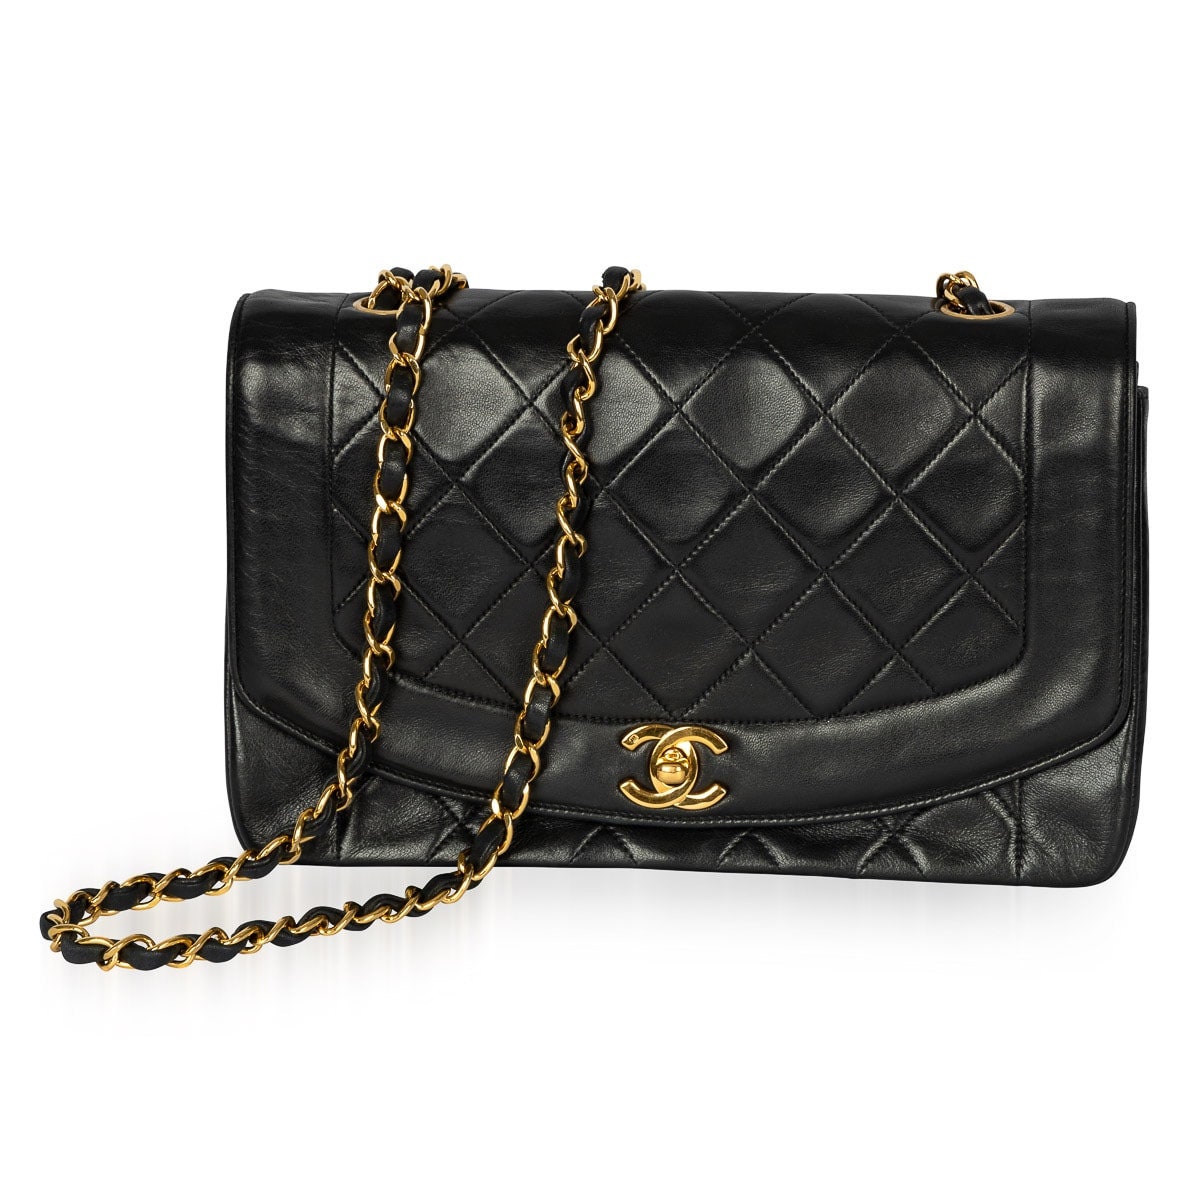 Chanel Chanel 11 Diana Black Quilted Leather Shoulder XL Flap Bag